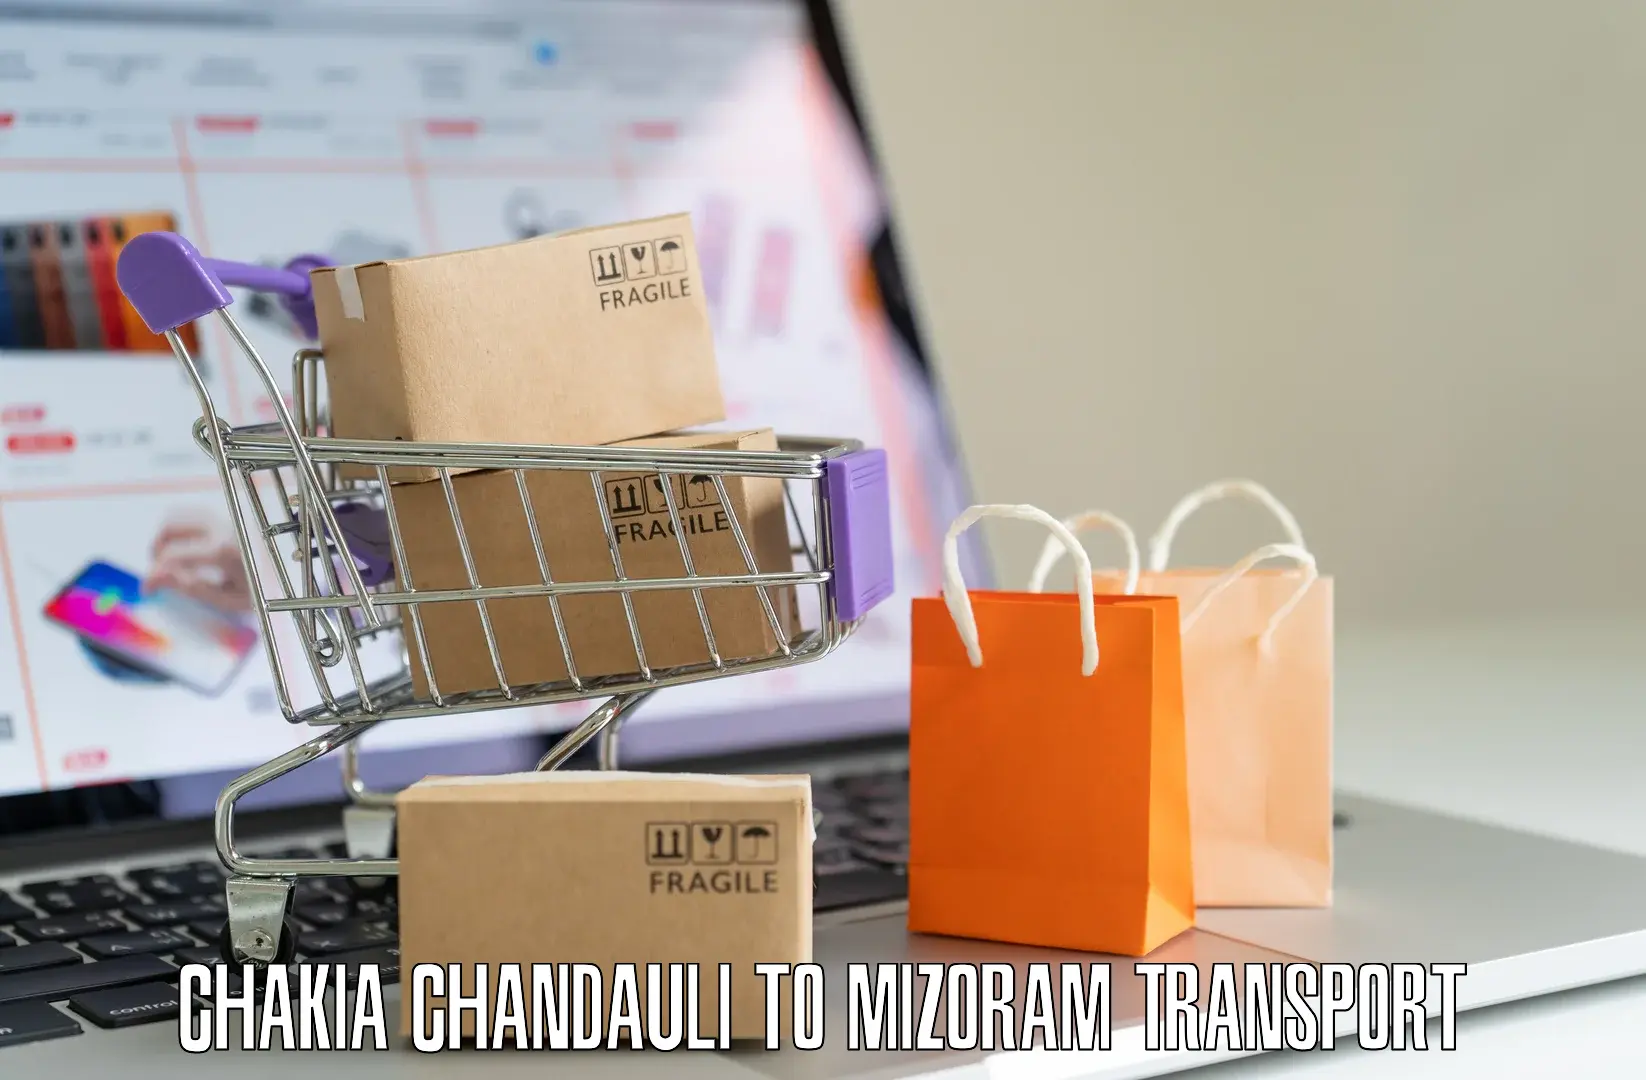 Commercial transport service Chakia Chandauli to Aizawl